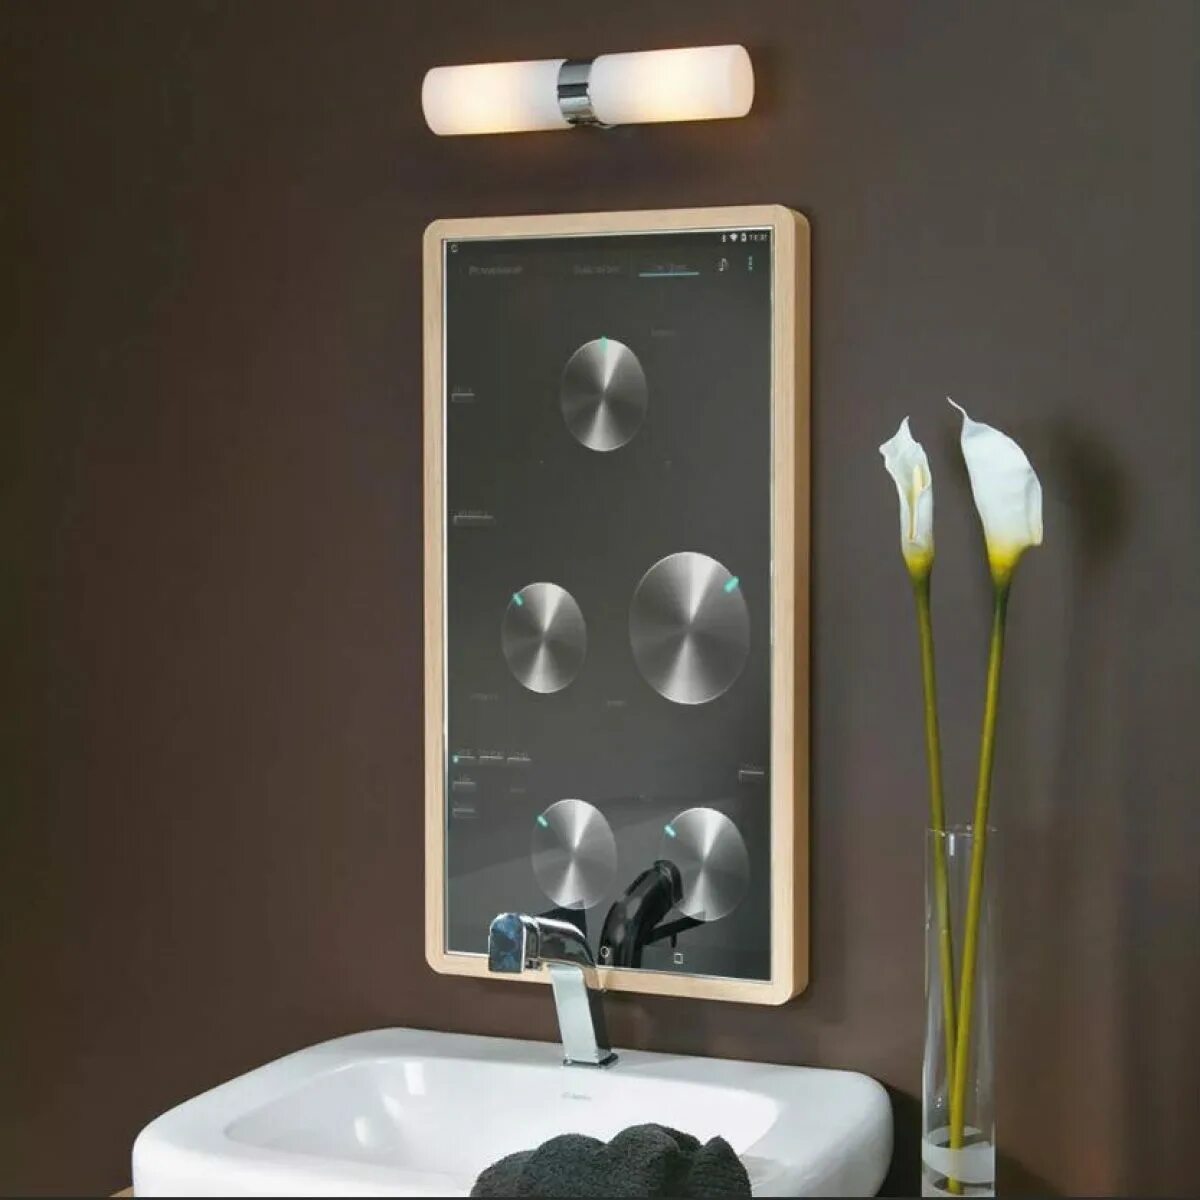 MIROCOOL Smart Mirror умное зеркало сенсорное. Зеркало Grossman Galaxy 857770. Умное зеркало в ванную. Интерактивное зеркало в ванную.